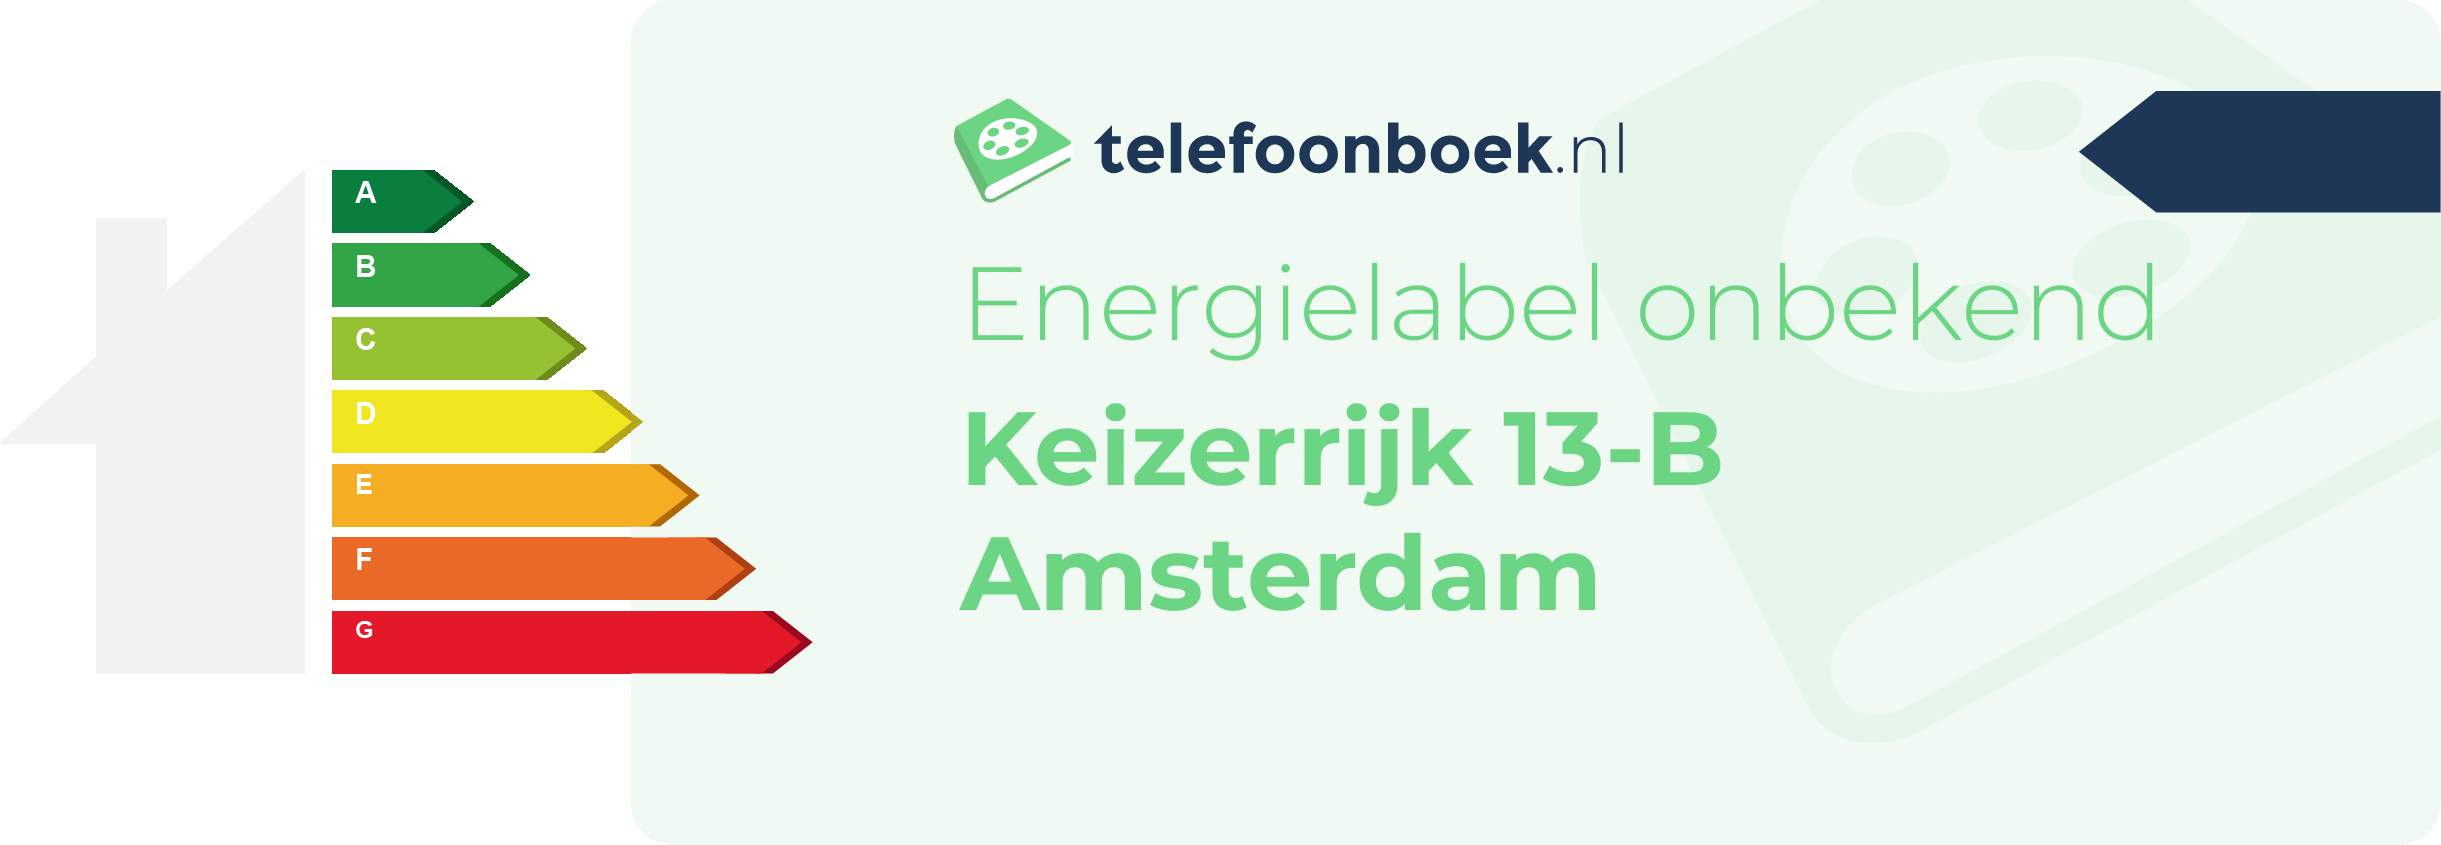 Energielabel Keizerrijk 13-B Amsterdam